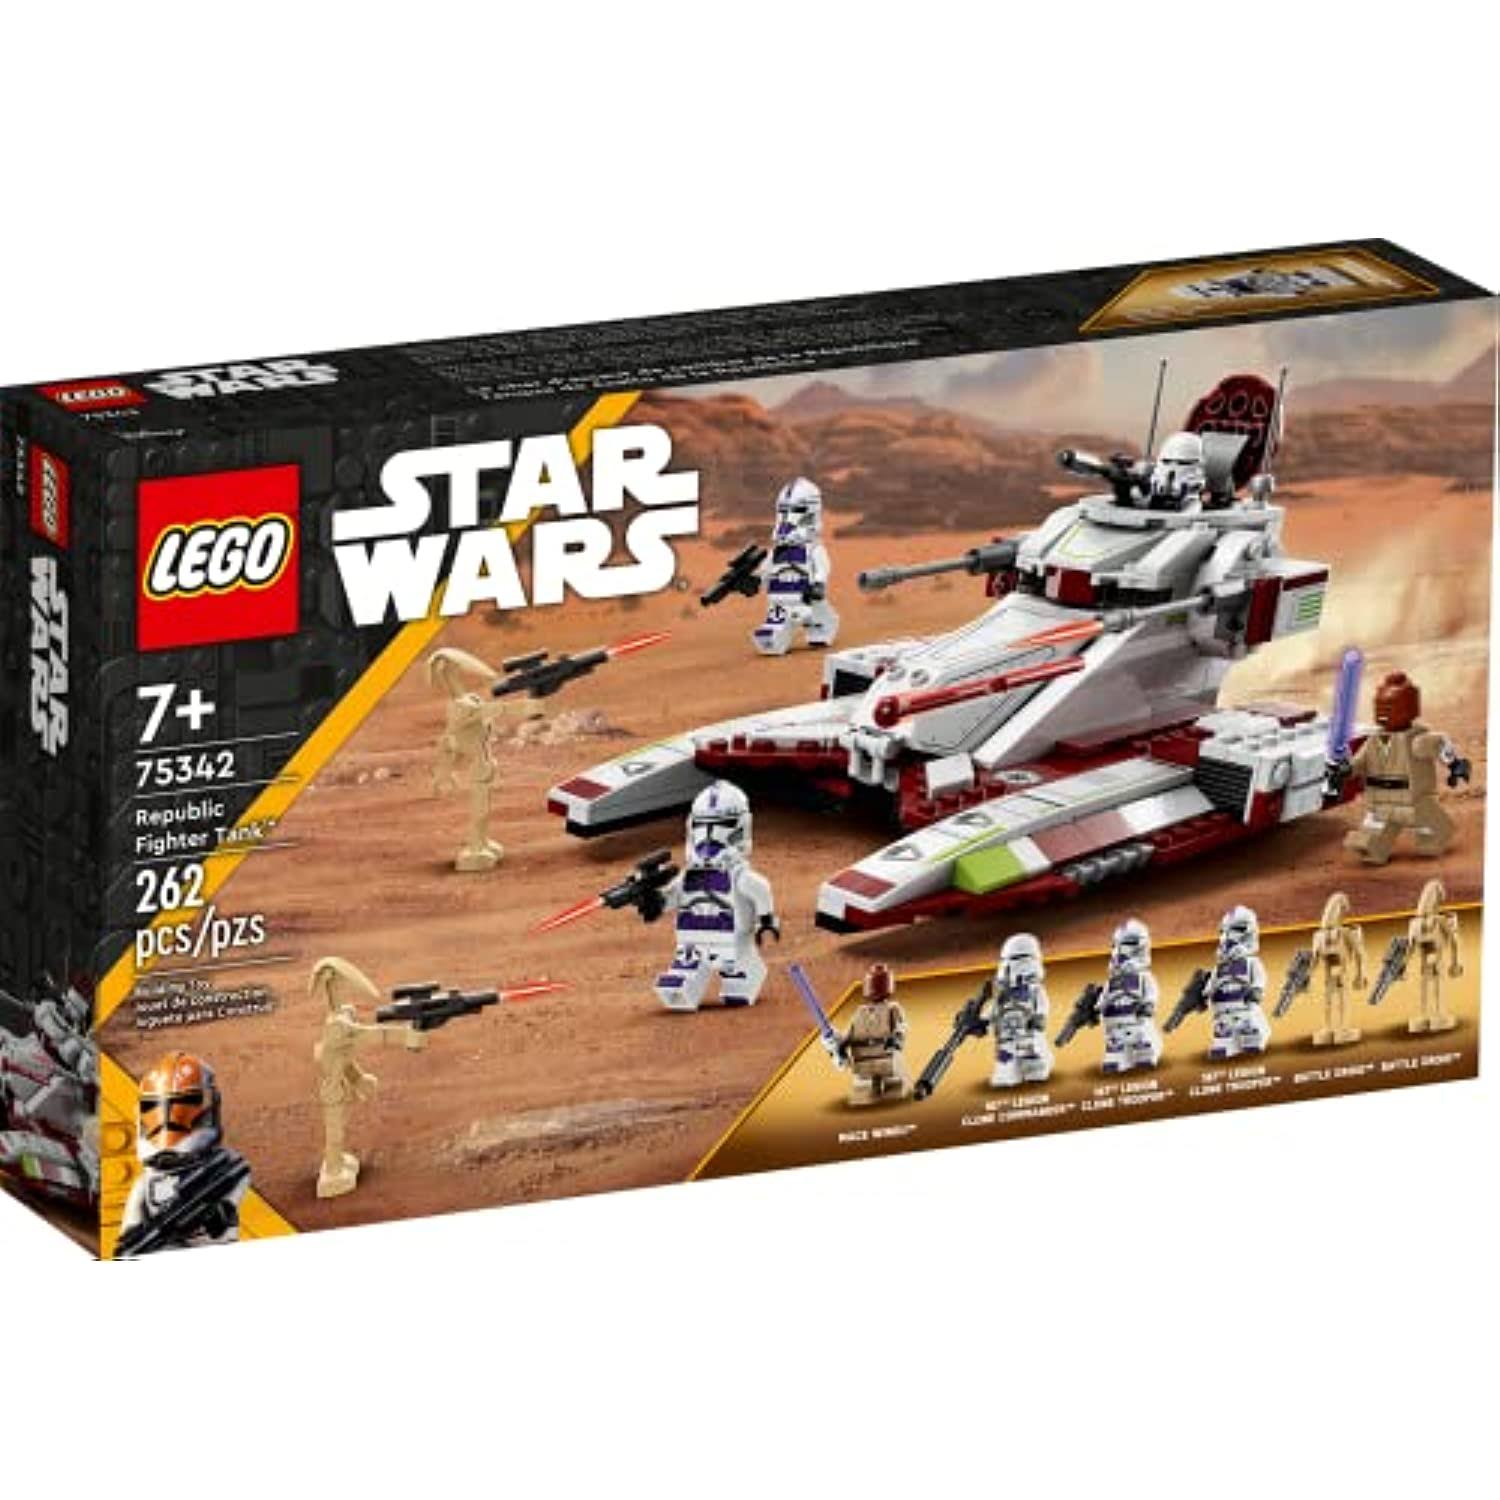 LEGO Star Wars 75342 Republic Fighter Tank (262pcs)